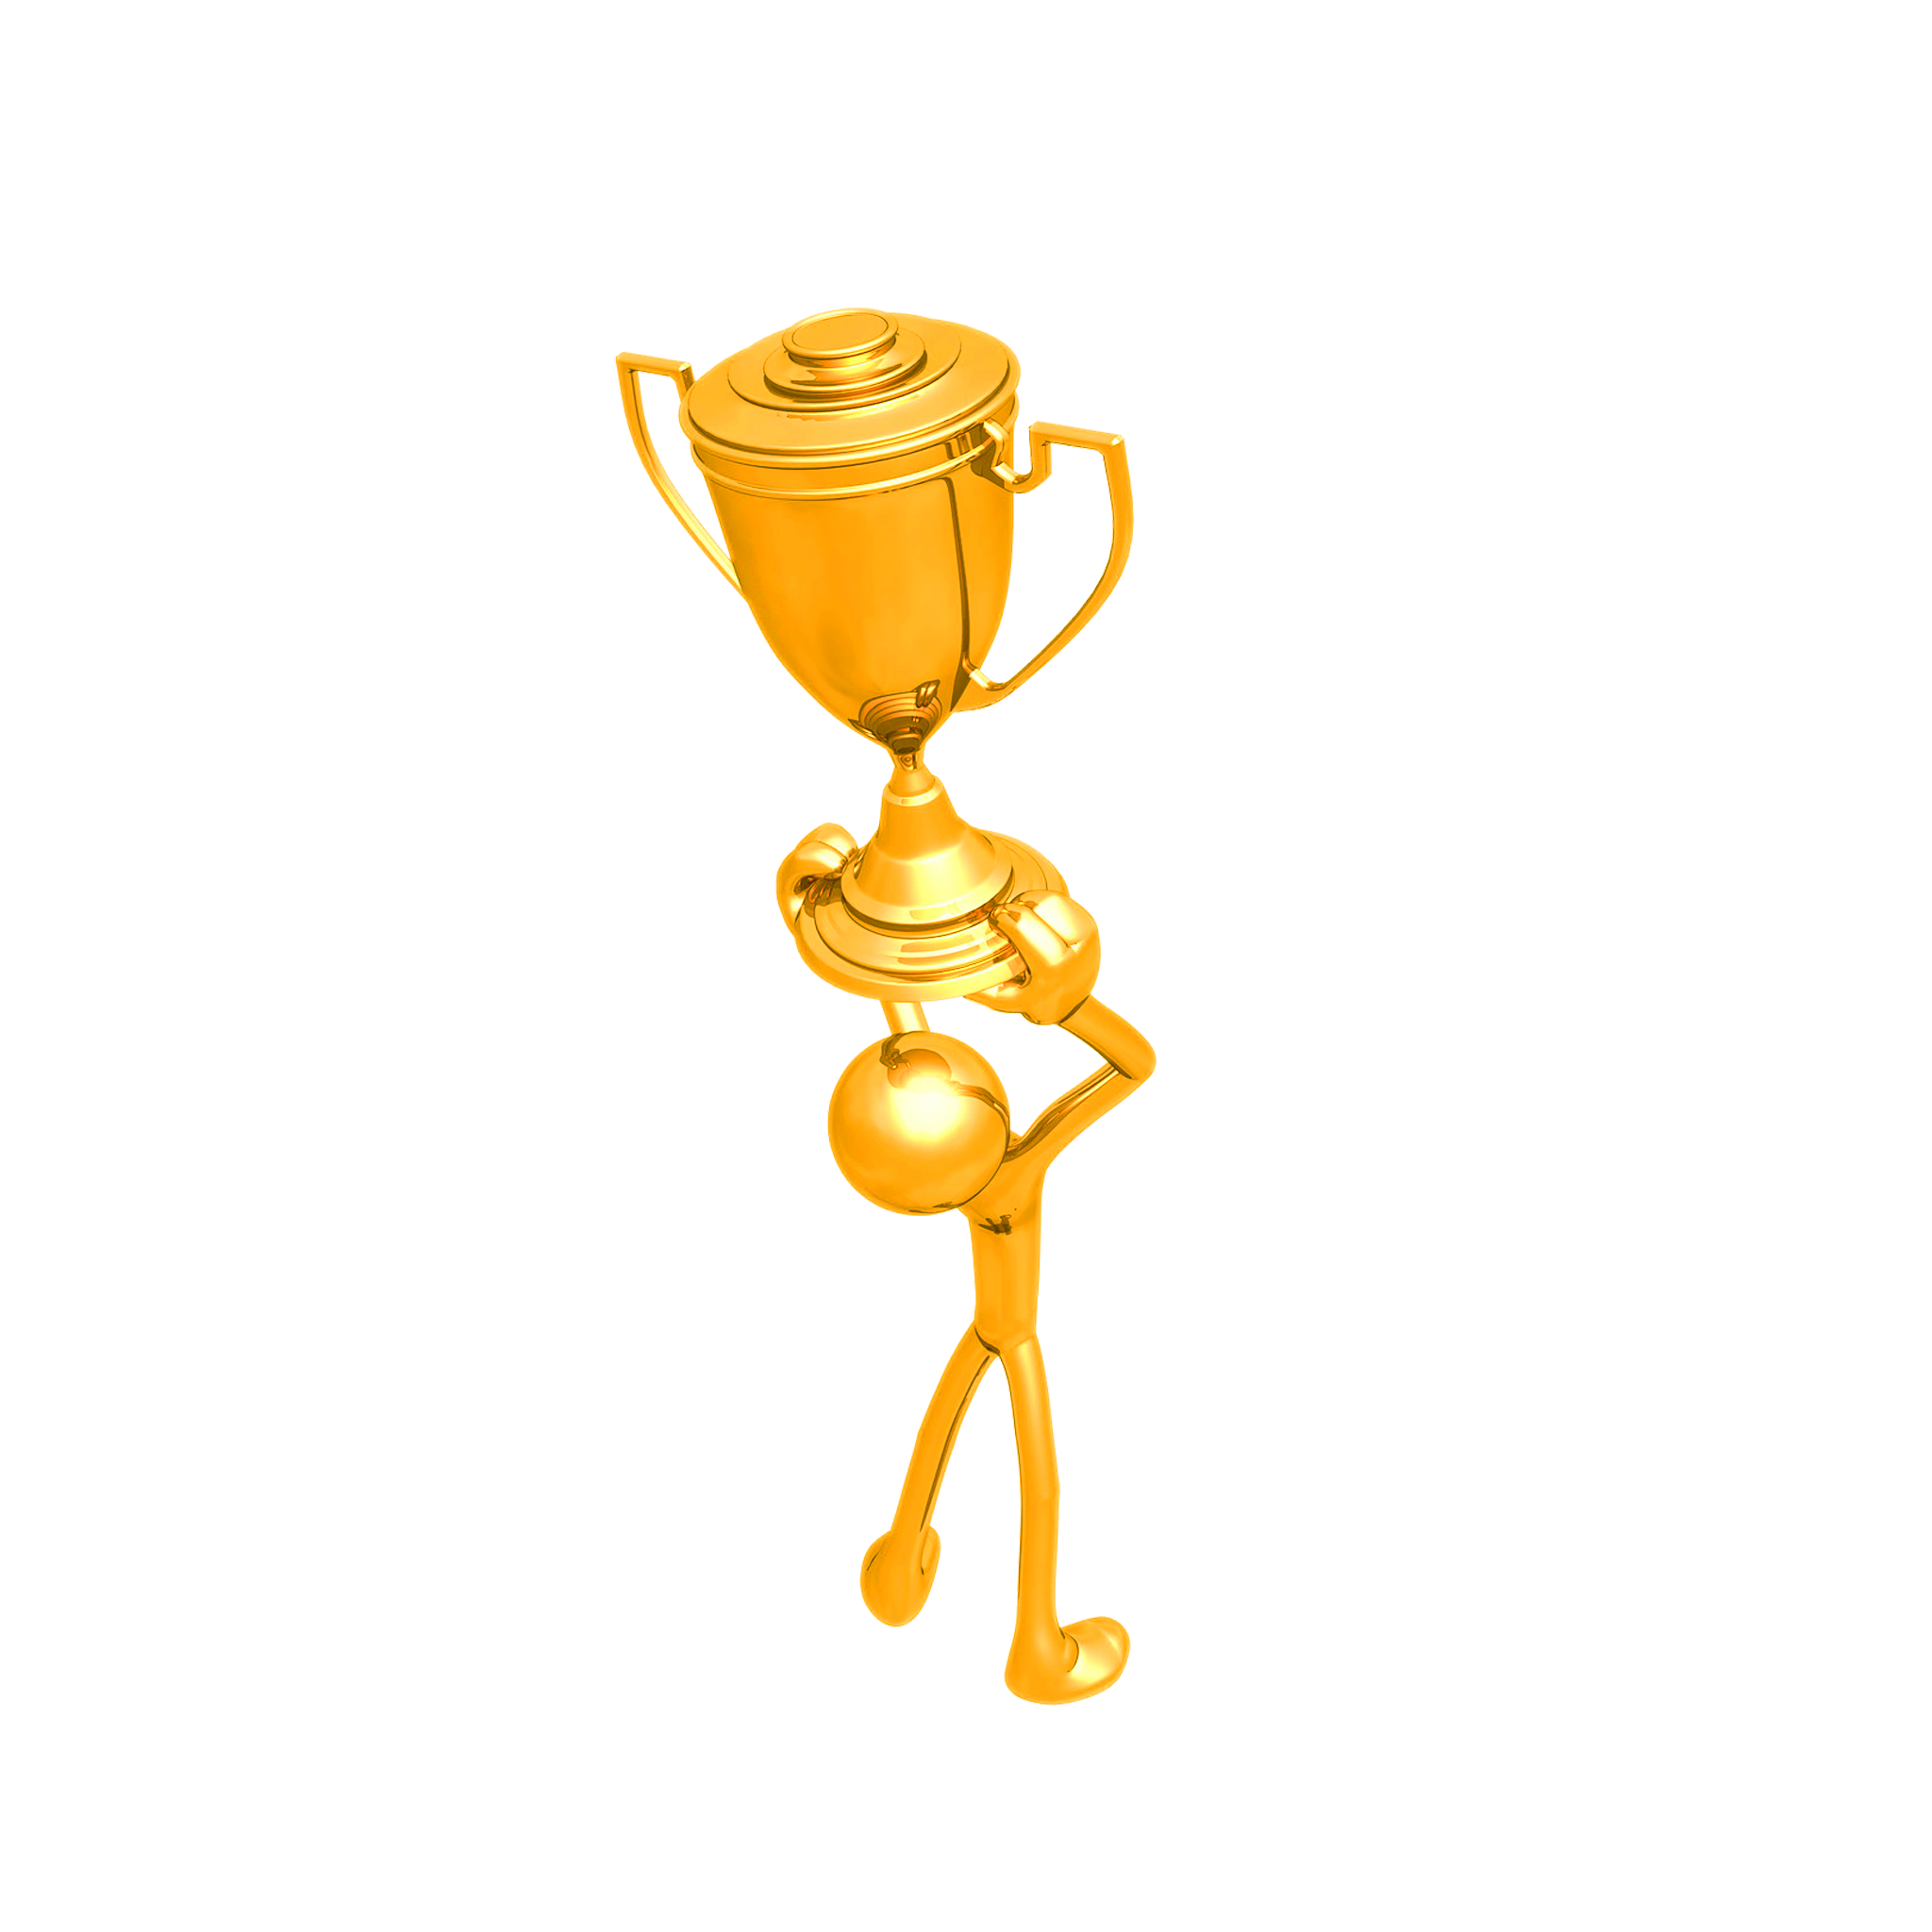 Award PNG High-Quality Image